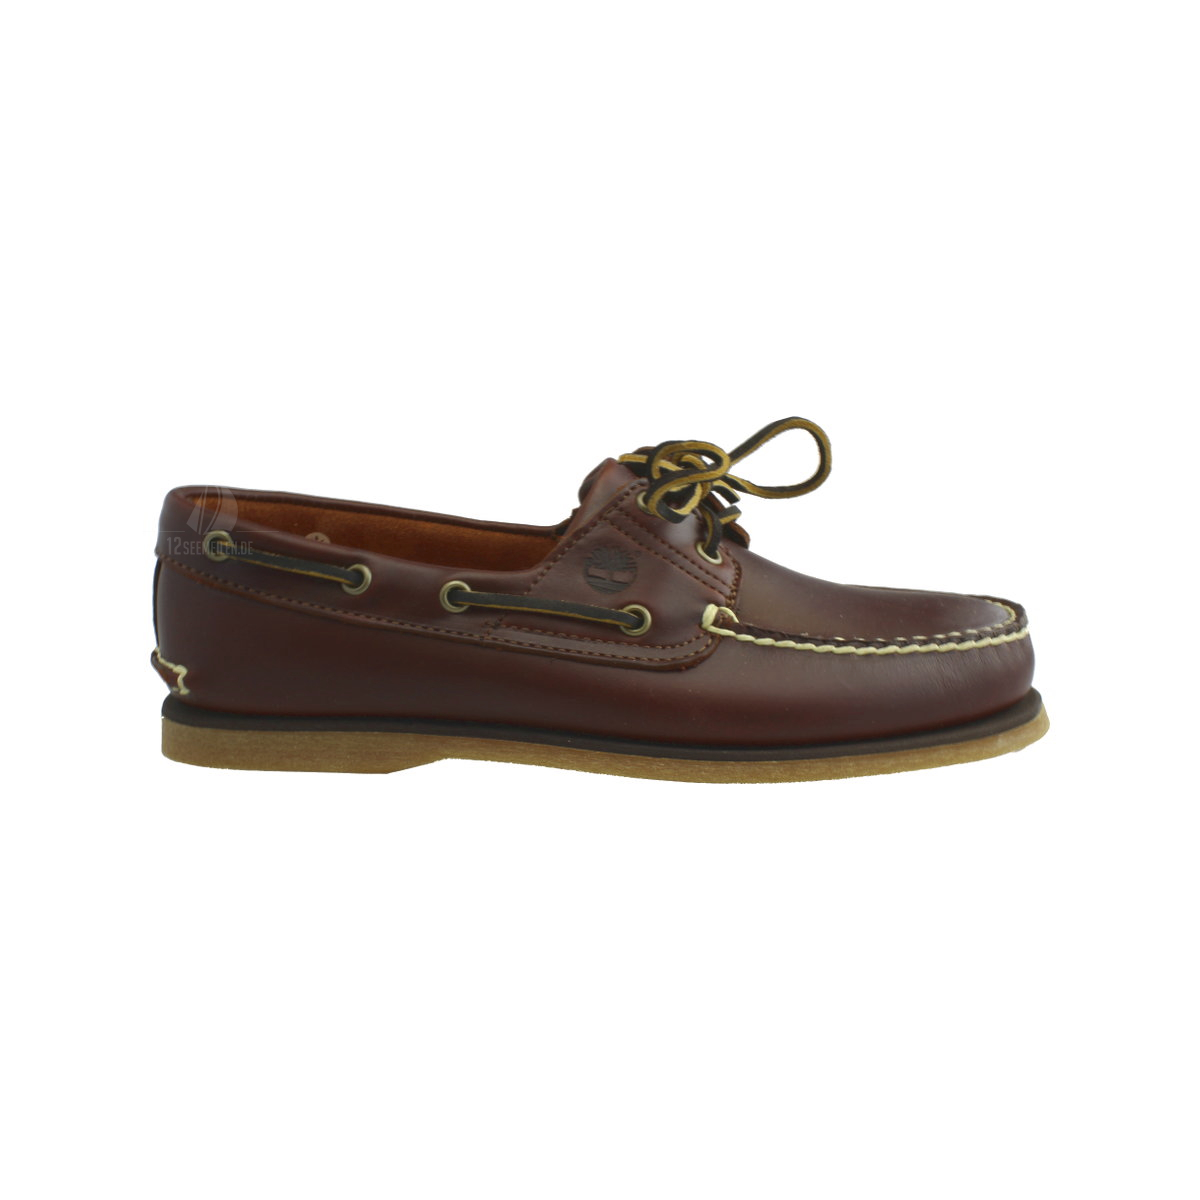 Timberland Classic Boat chaussures bateau Hommes brun - rouge eu 43,5 ( us 9,5 )